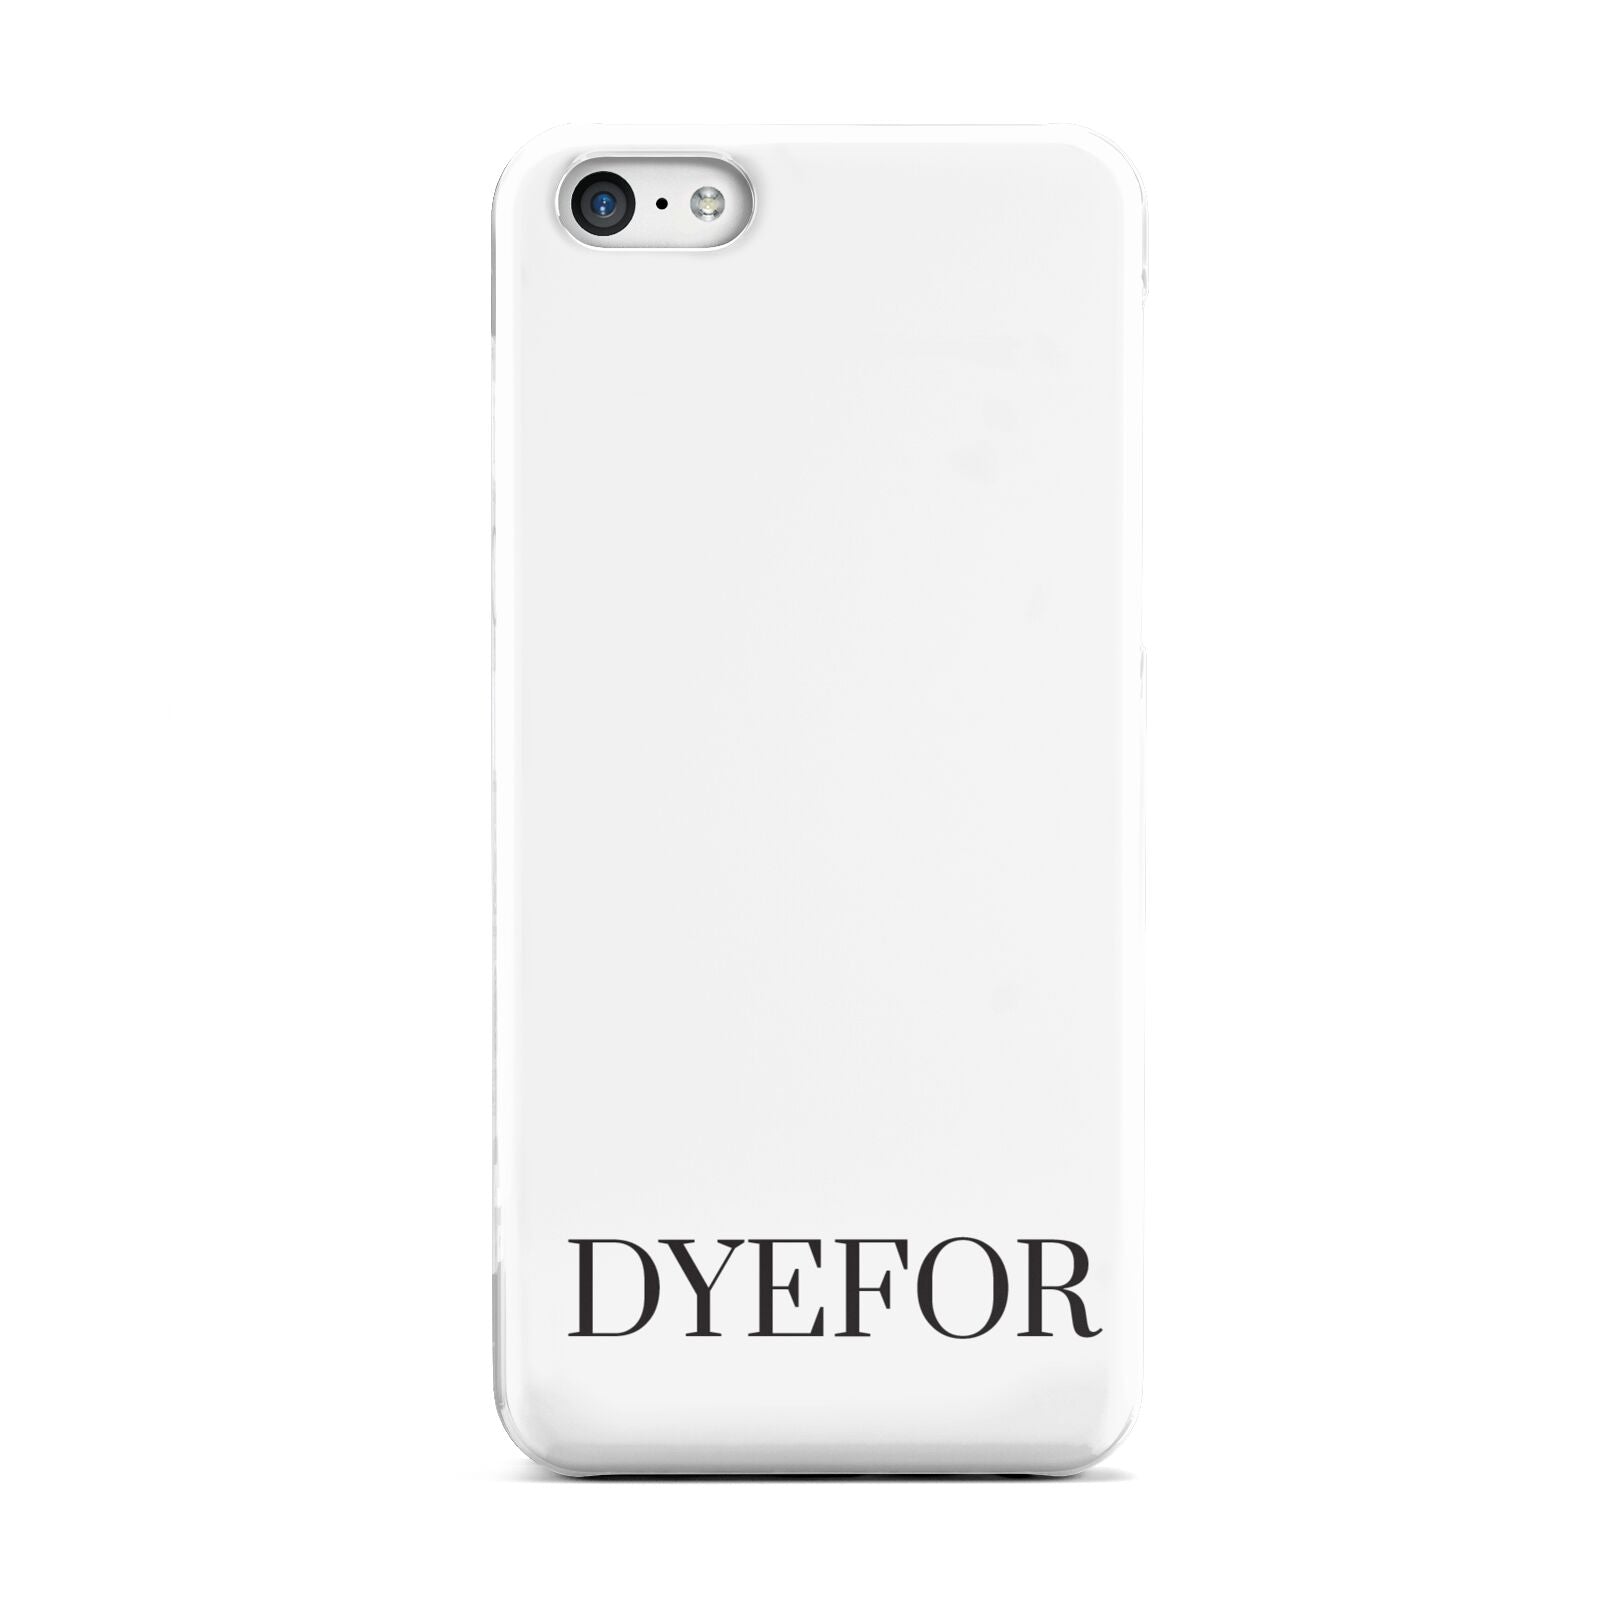 Name Personalised White Apple iPhone 5c Case